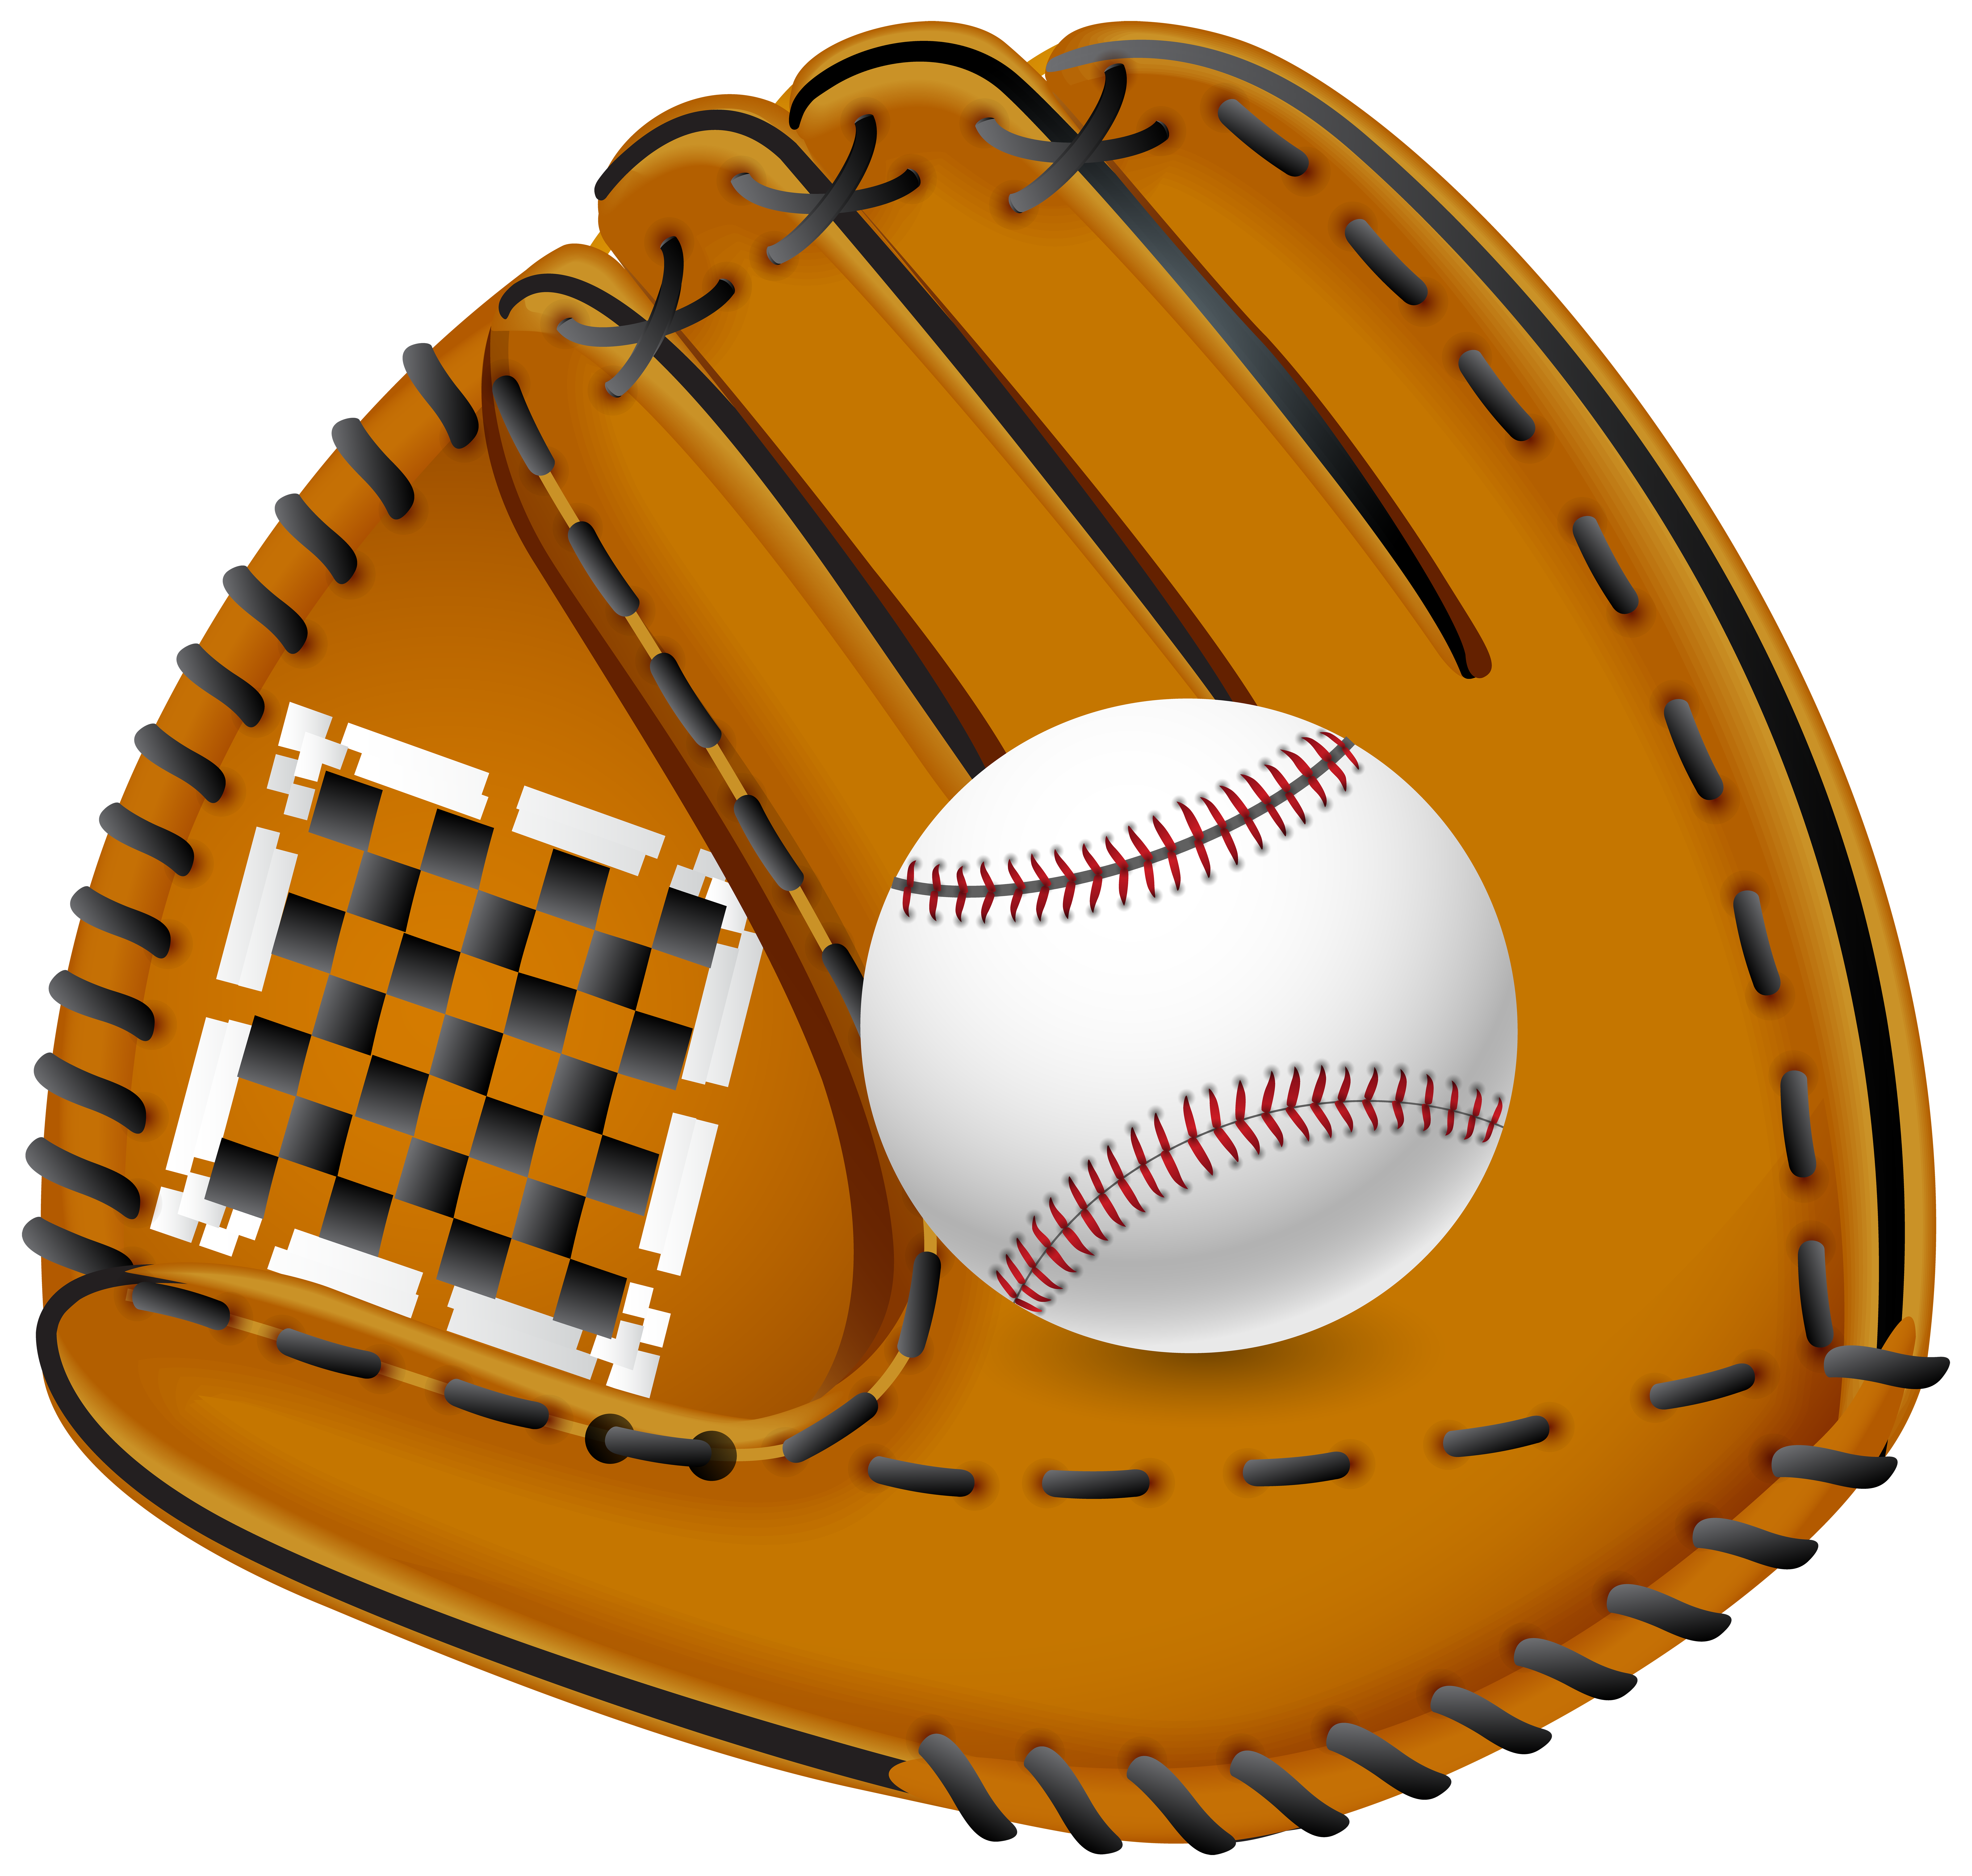 sports clipart baseball